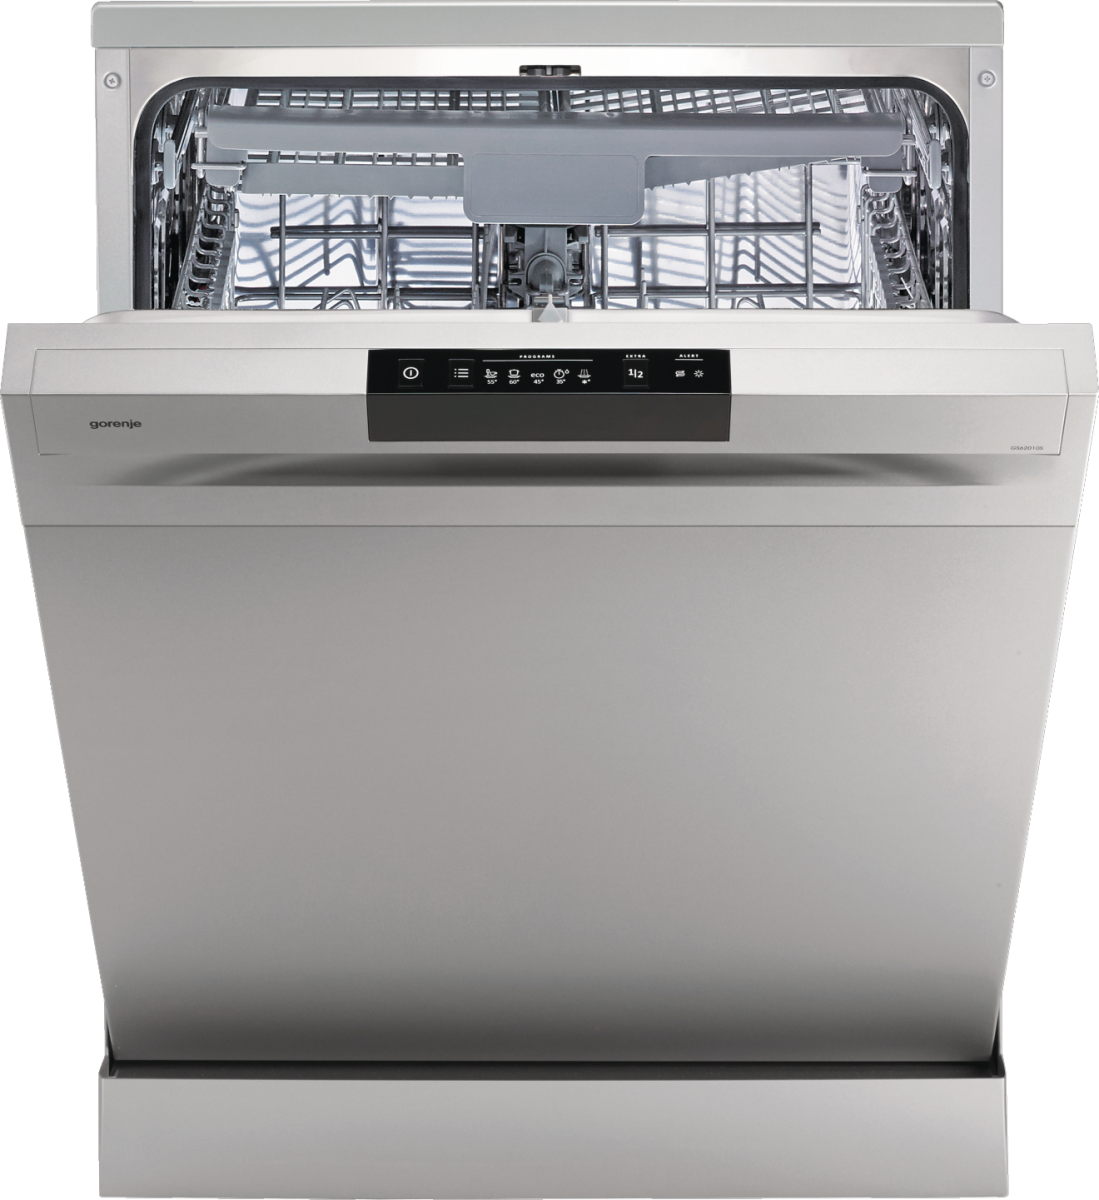 Пмм горенье. Посудомоечная машина Gorenje gs620e10s. Посудомоечная машина 60 см Gorenje gs620e10s. Посудомоечная машина Gorenje gs520e15w. Посудомоечная машина Gorenje gs53110w.